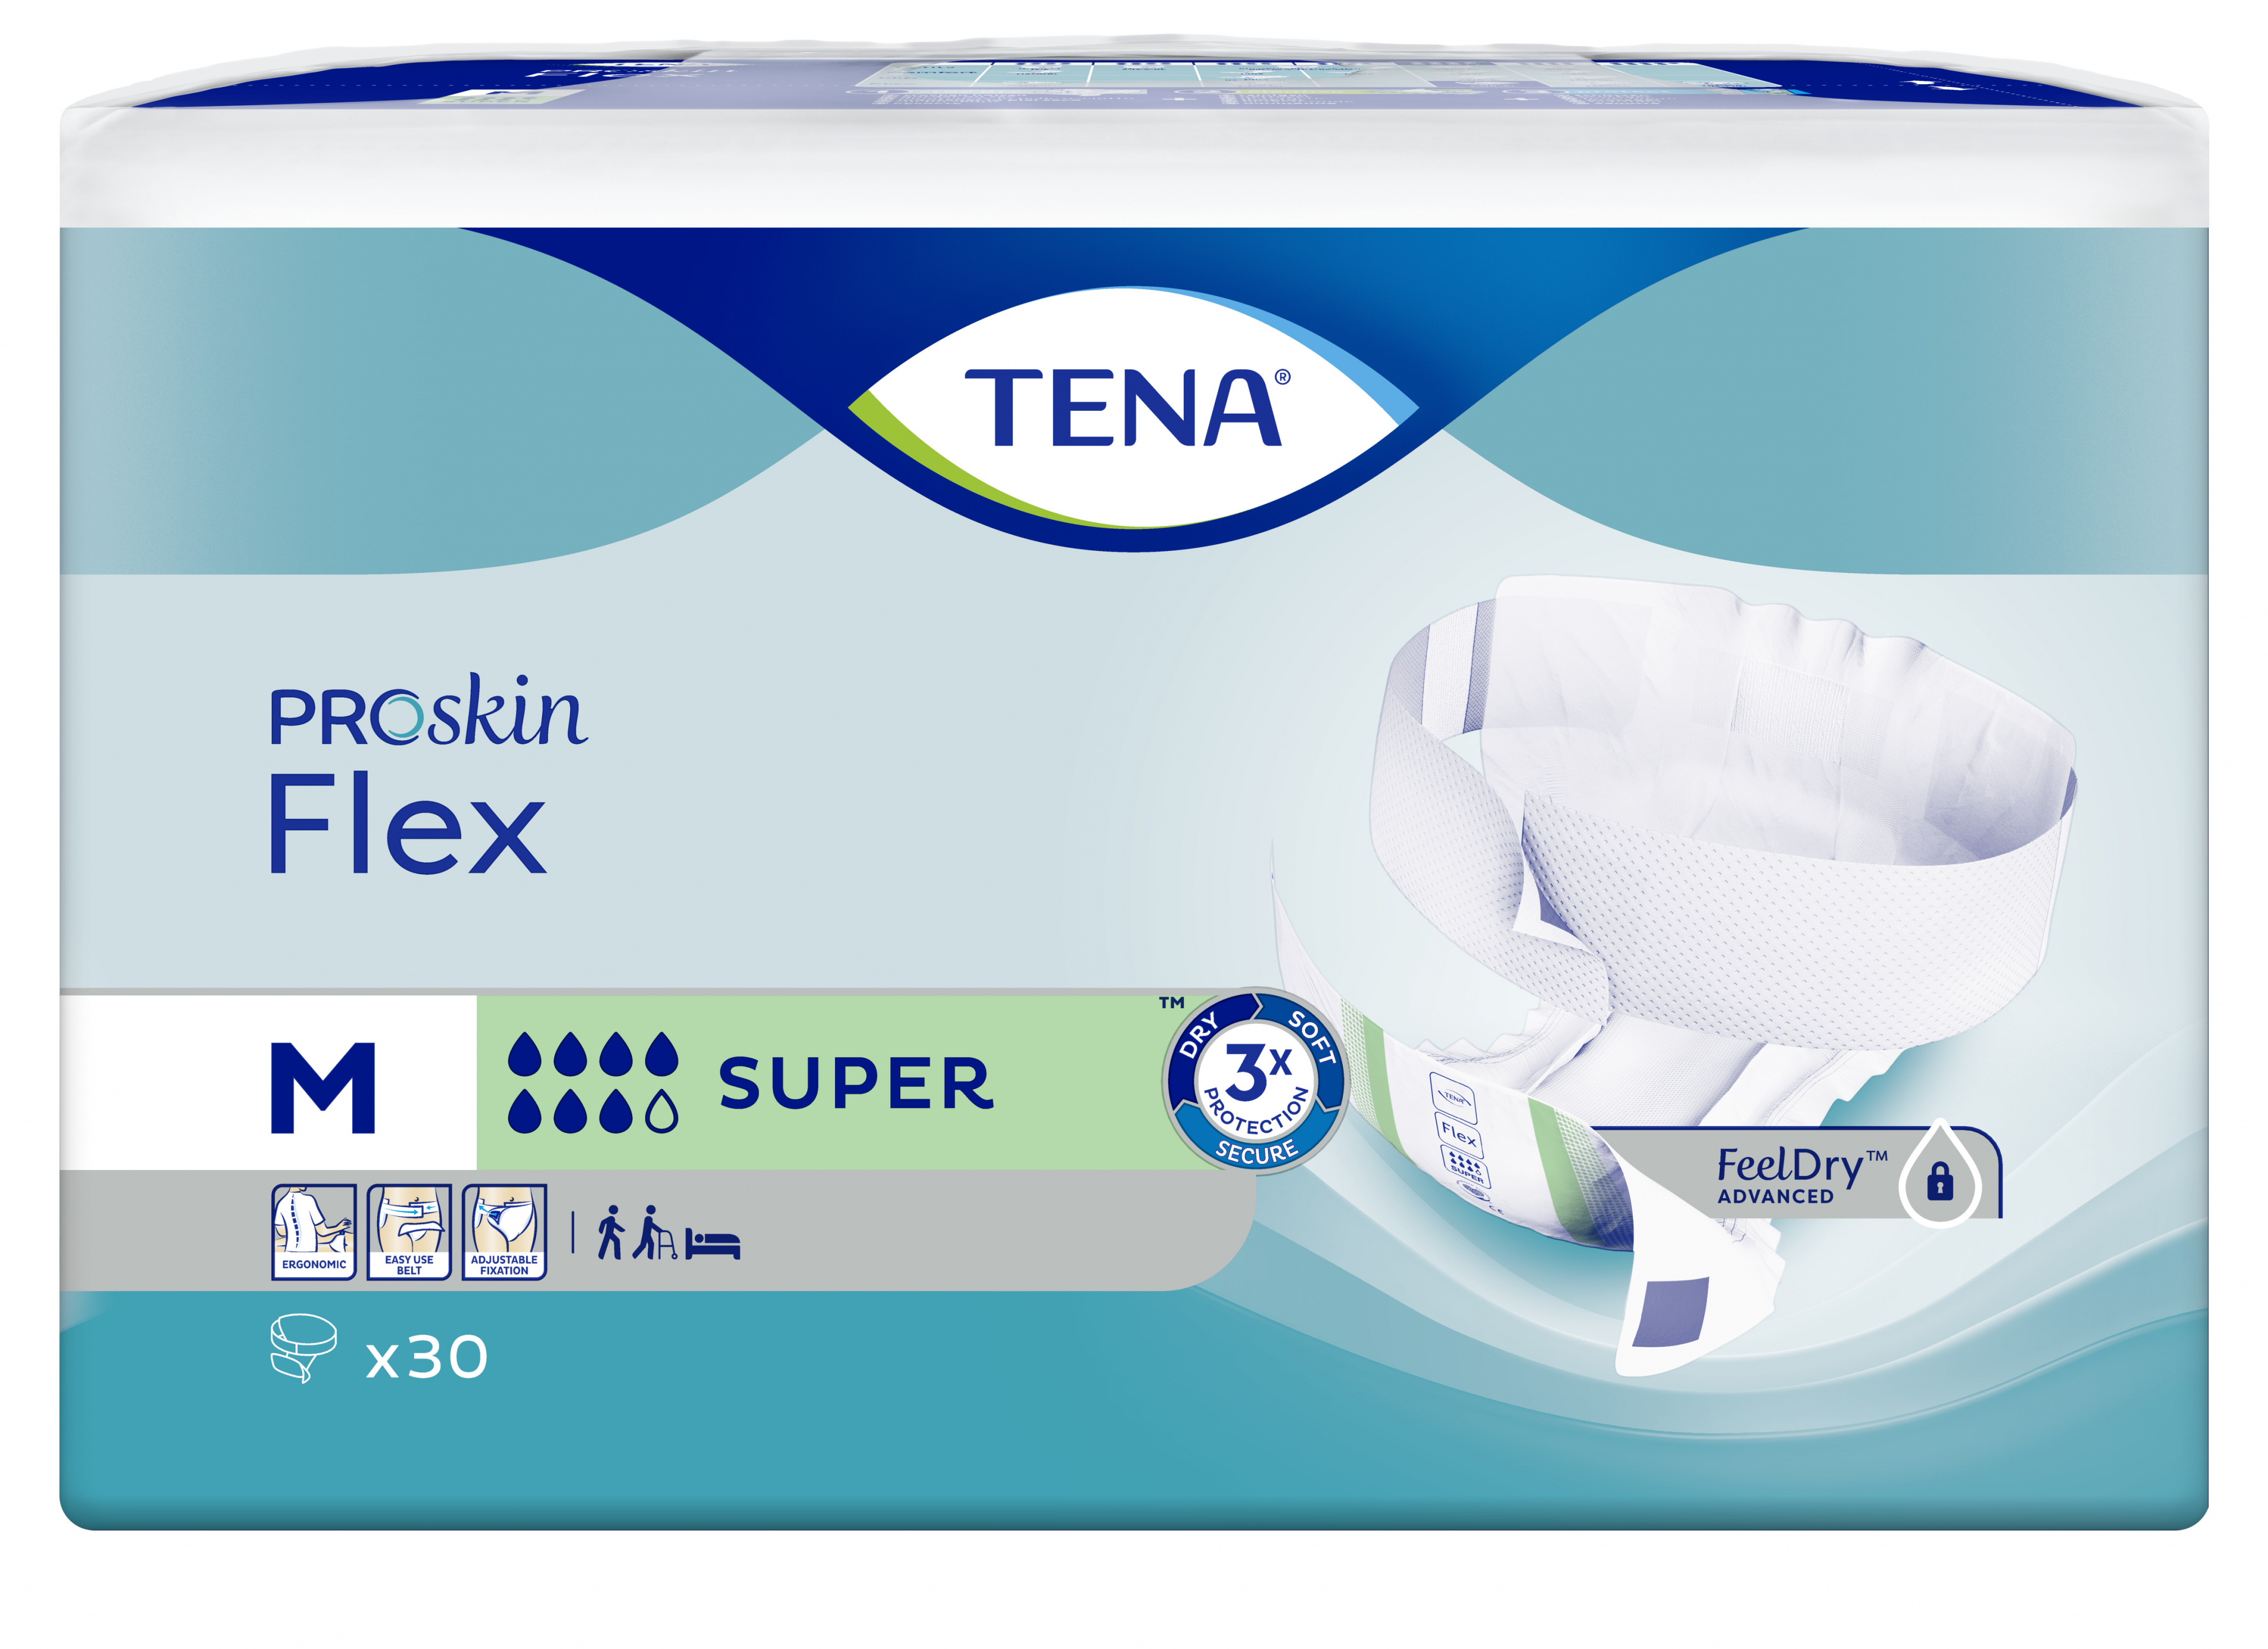 TENA PROskin Flex Super Medium 30s image 0